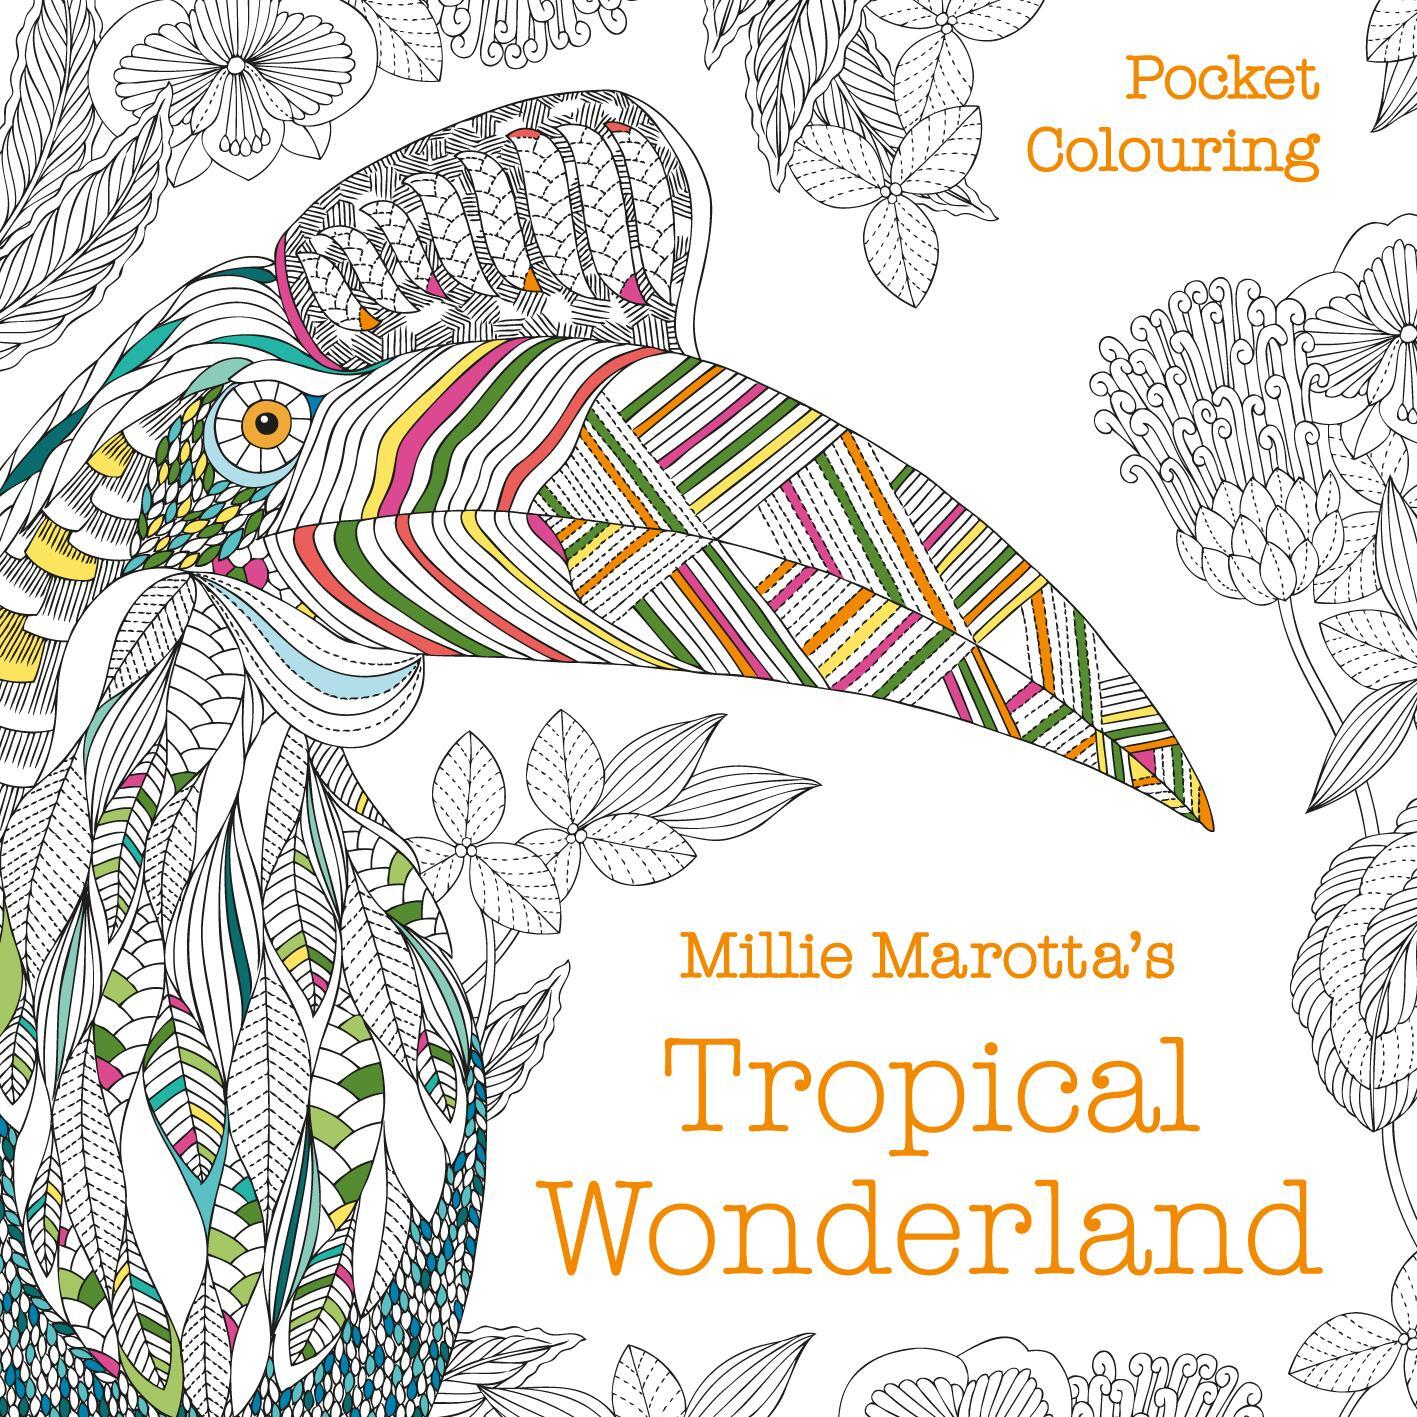 Cover: 9781849945912 | Millie Marotta's Tropical Wonderland Pocket Colouring | Millie Marotta